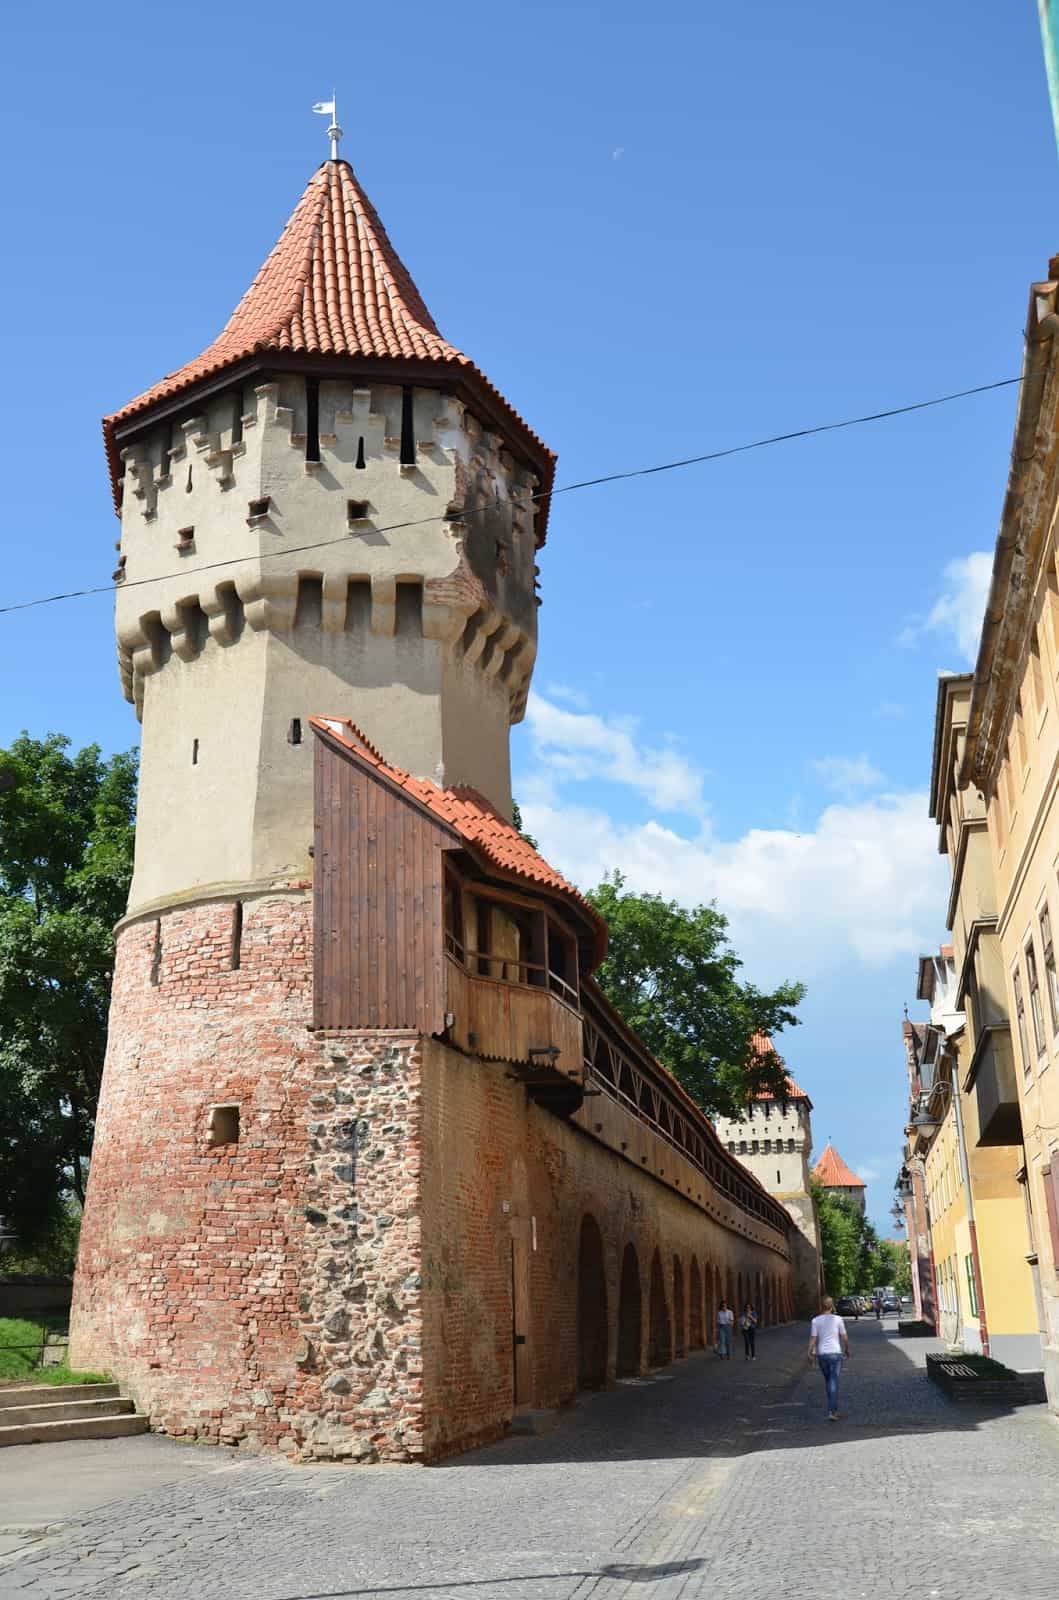 Carpenter’s Tower in Sibiu, Romania